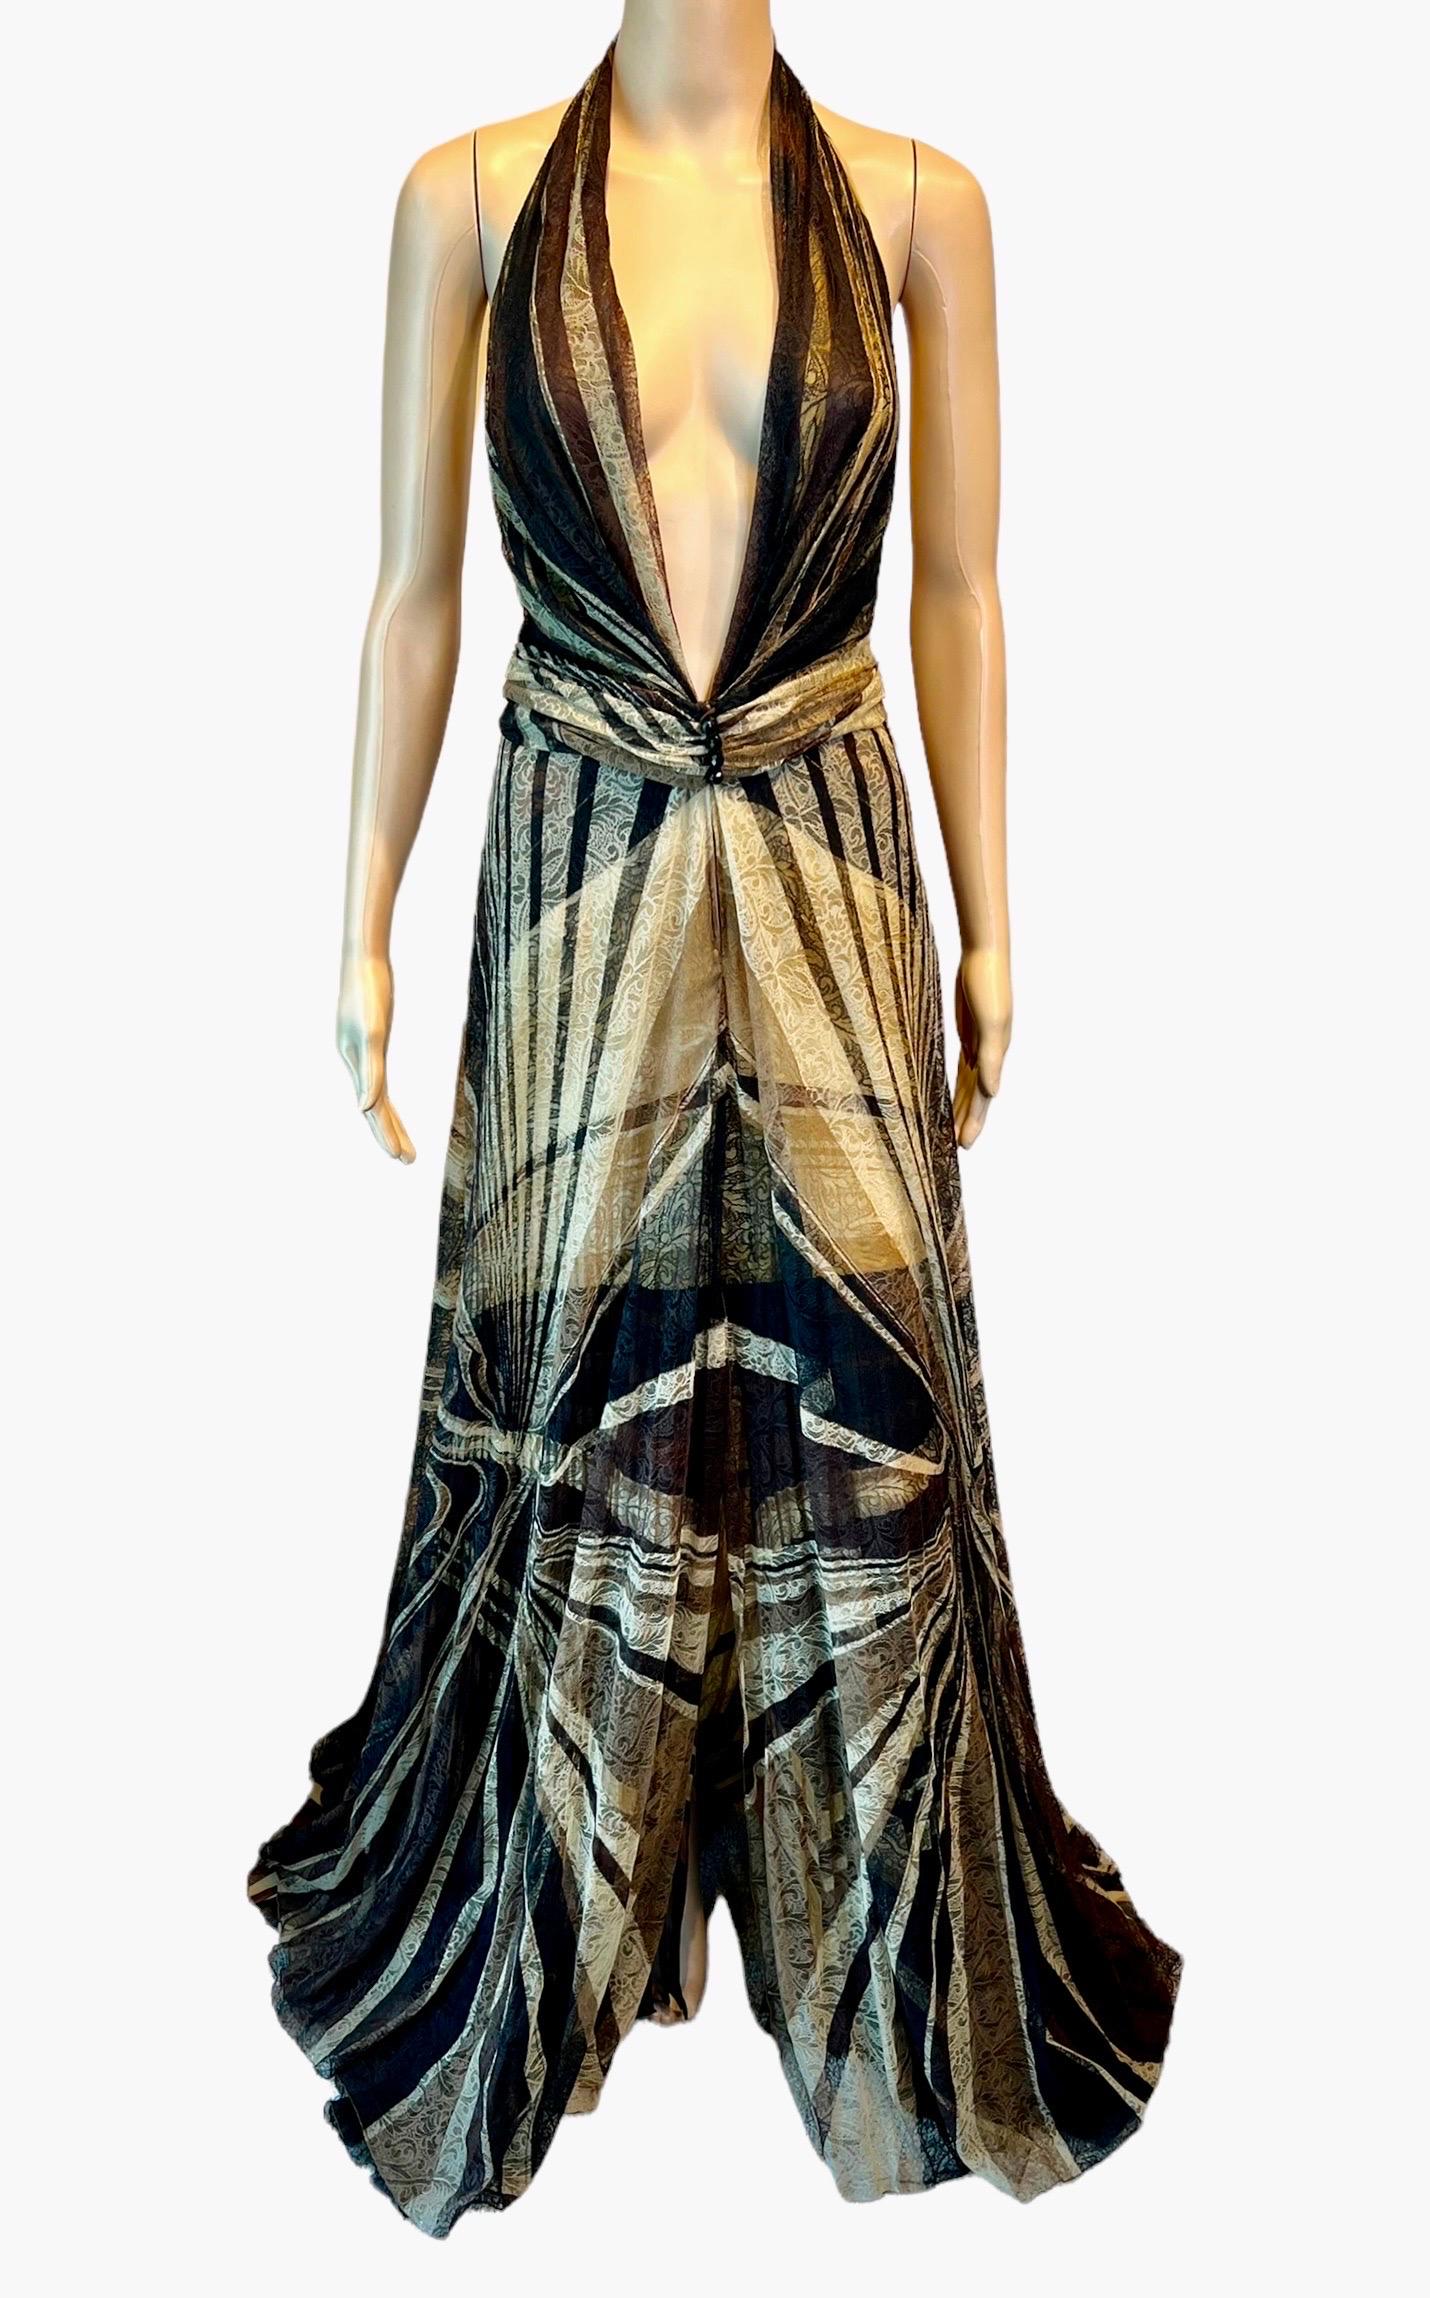 Gianni Versace F/W 2000 Runway Plunging Sheer Lace Silk Backless Evening Dress Gown IT 42

Look 57 de la collection automne 2000. Futured dans la campagne Versace de l'automne 2000.
